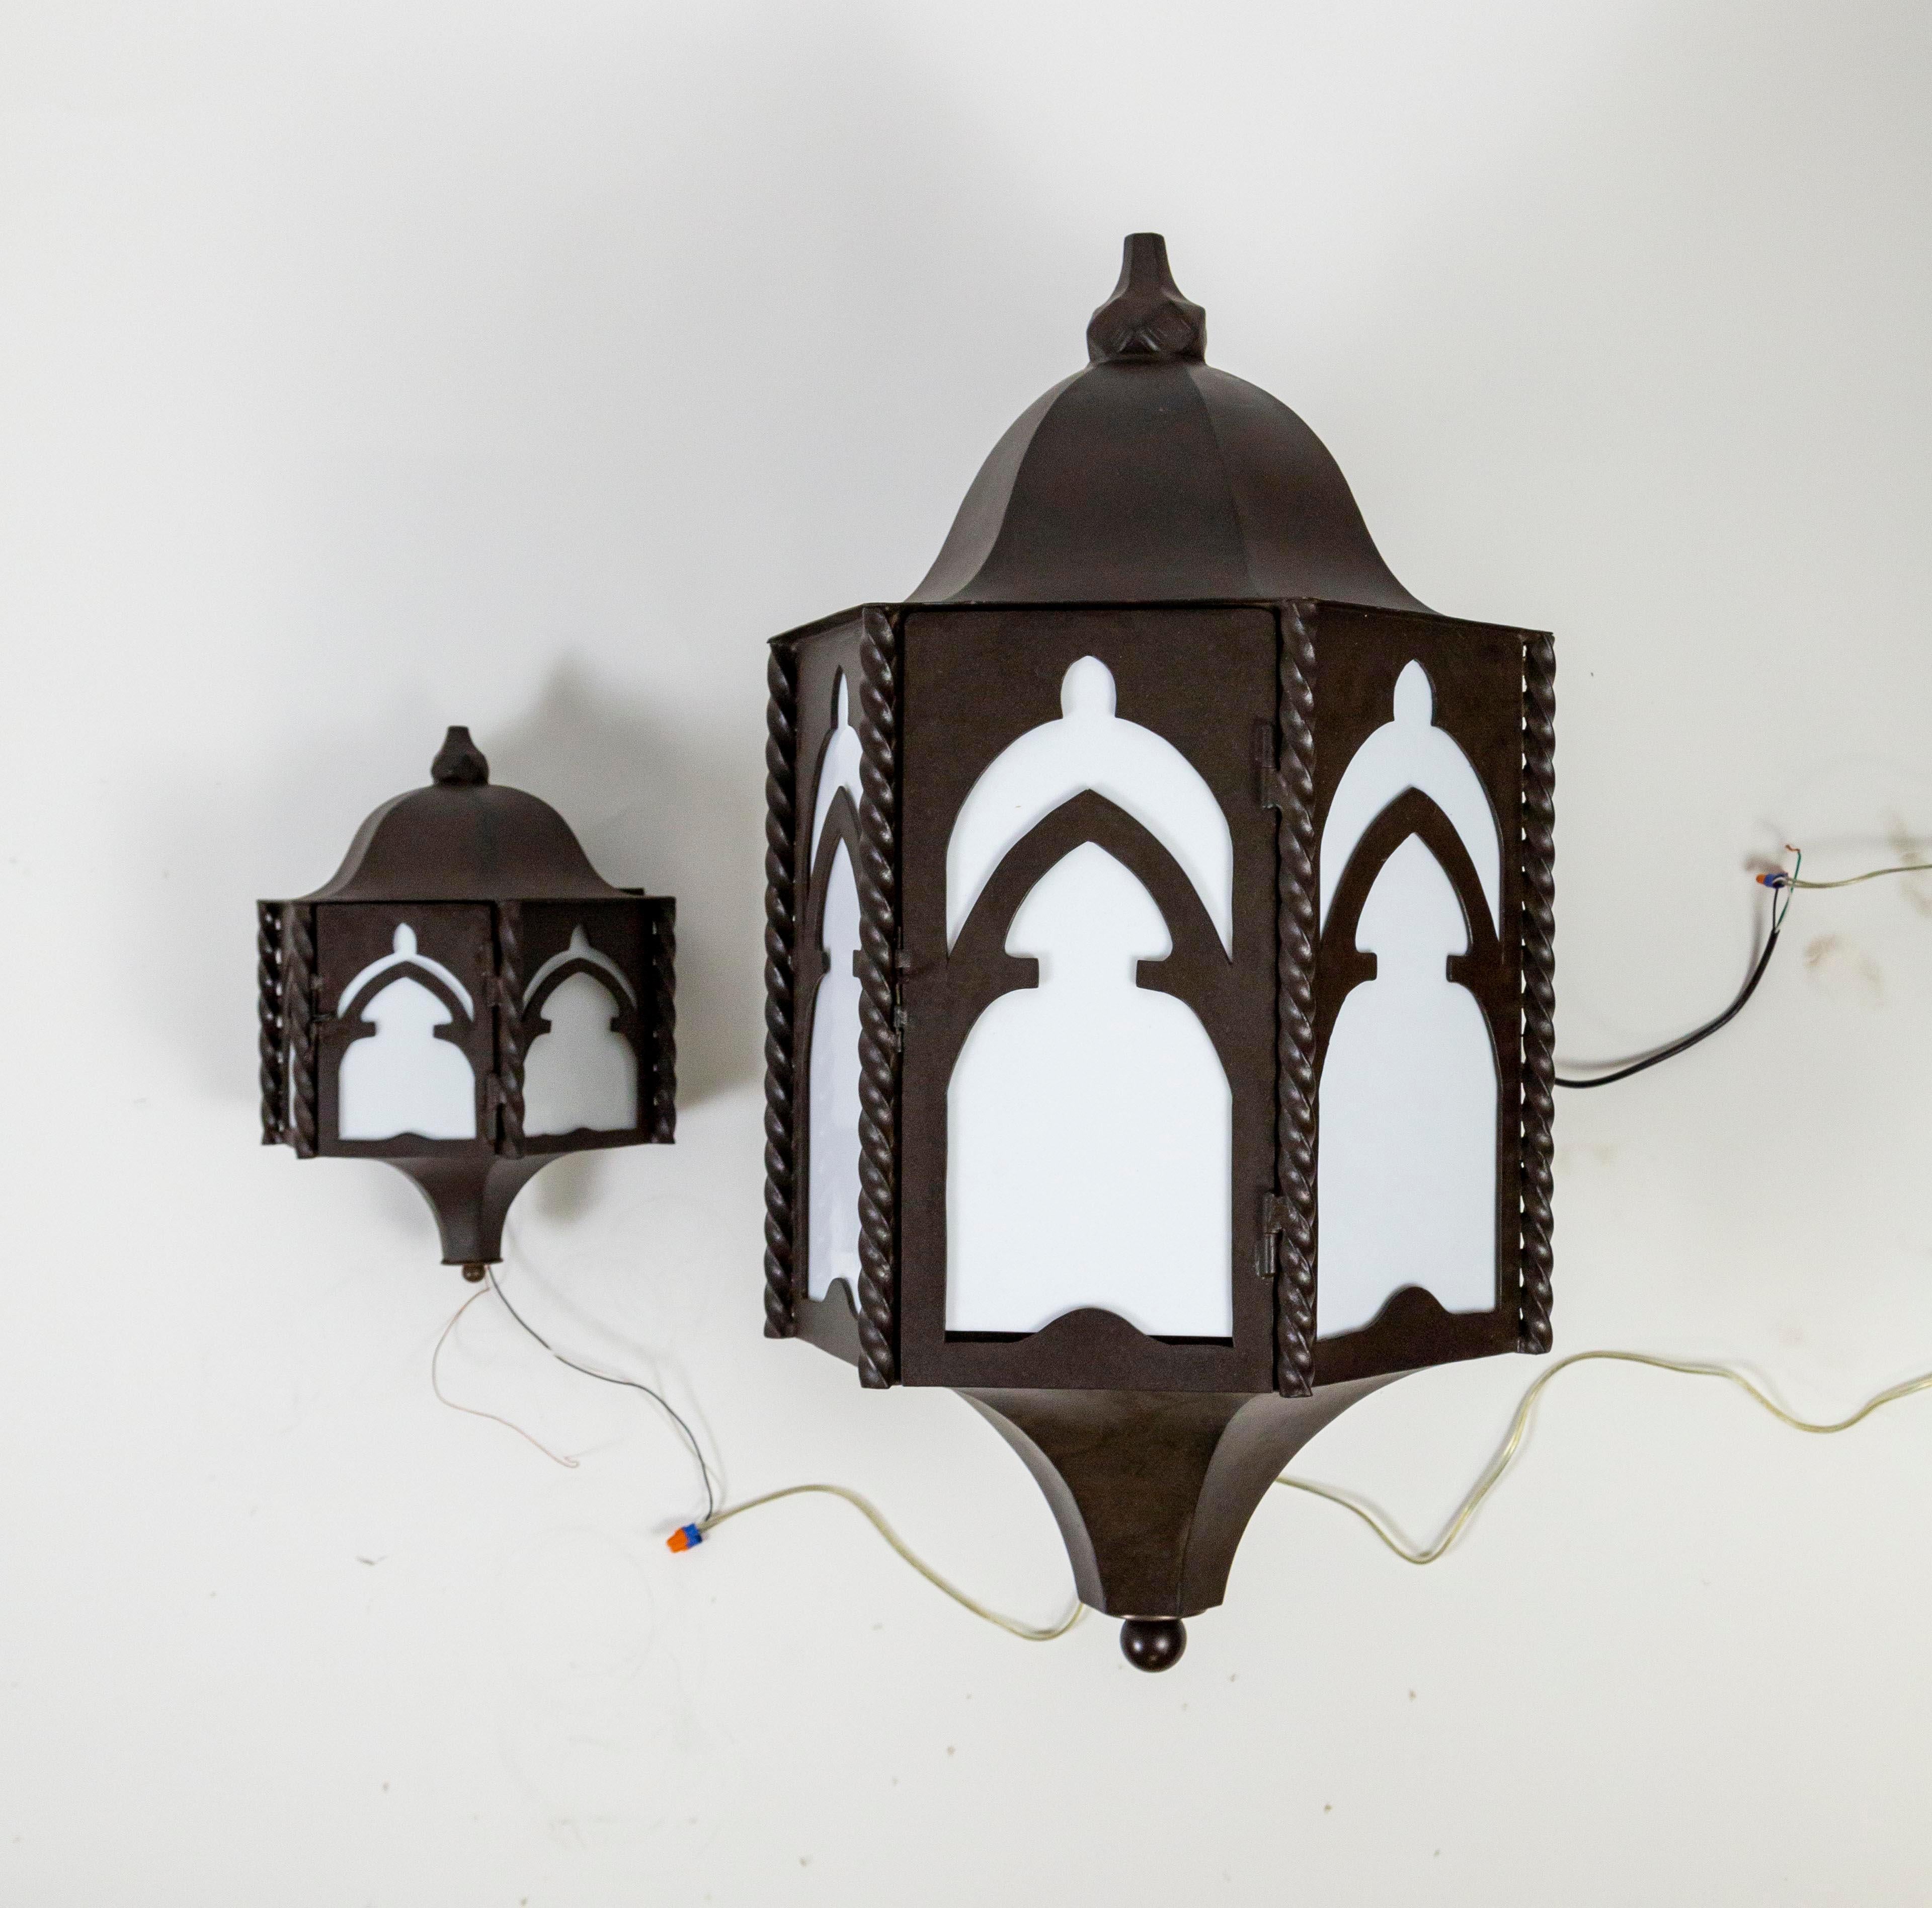 Giant Iron Gothic Arch Paul Ferrante Wall Lanterns w/ Milk Glass Panels 'Pair' For Sale 1